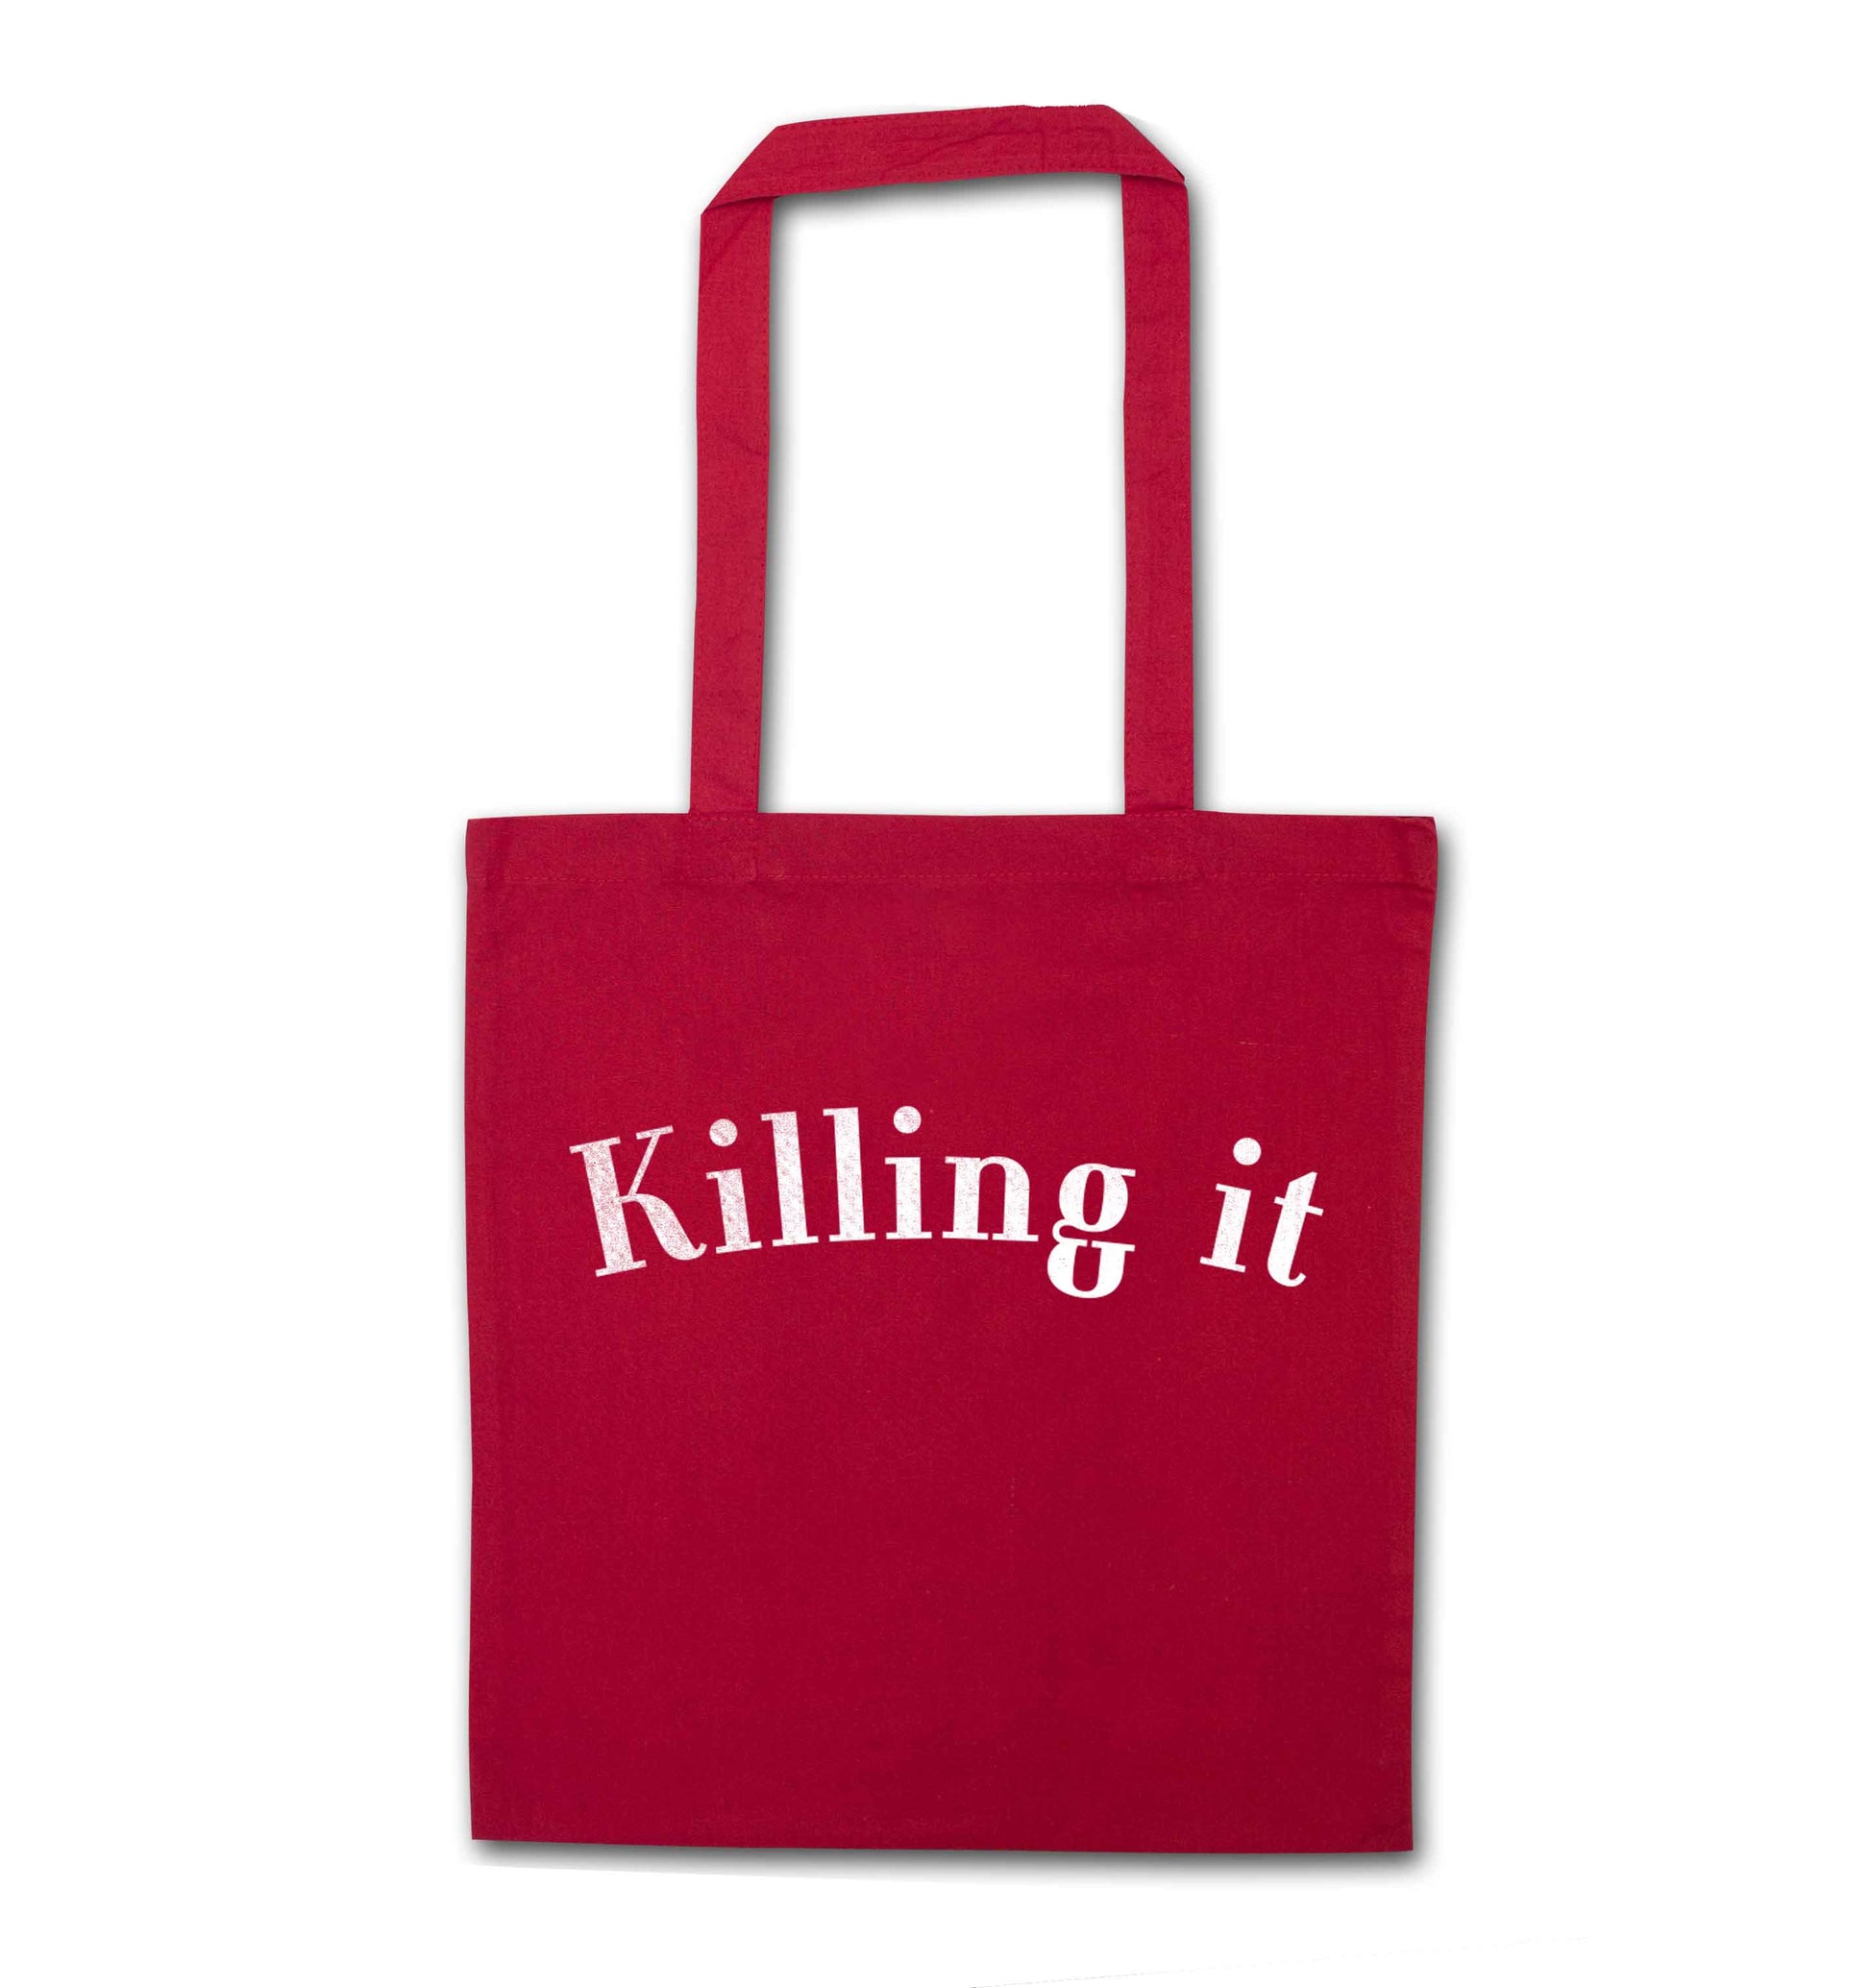 Killing it red tote bag